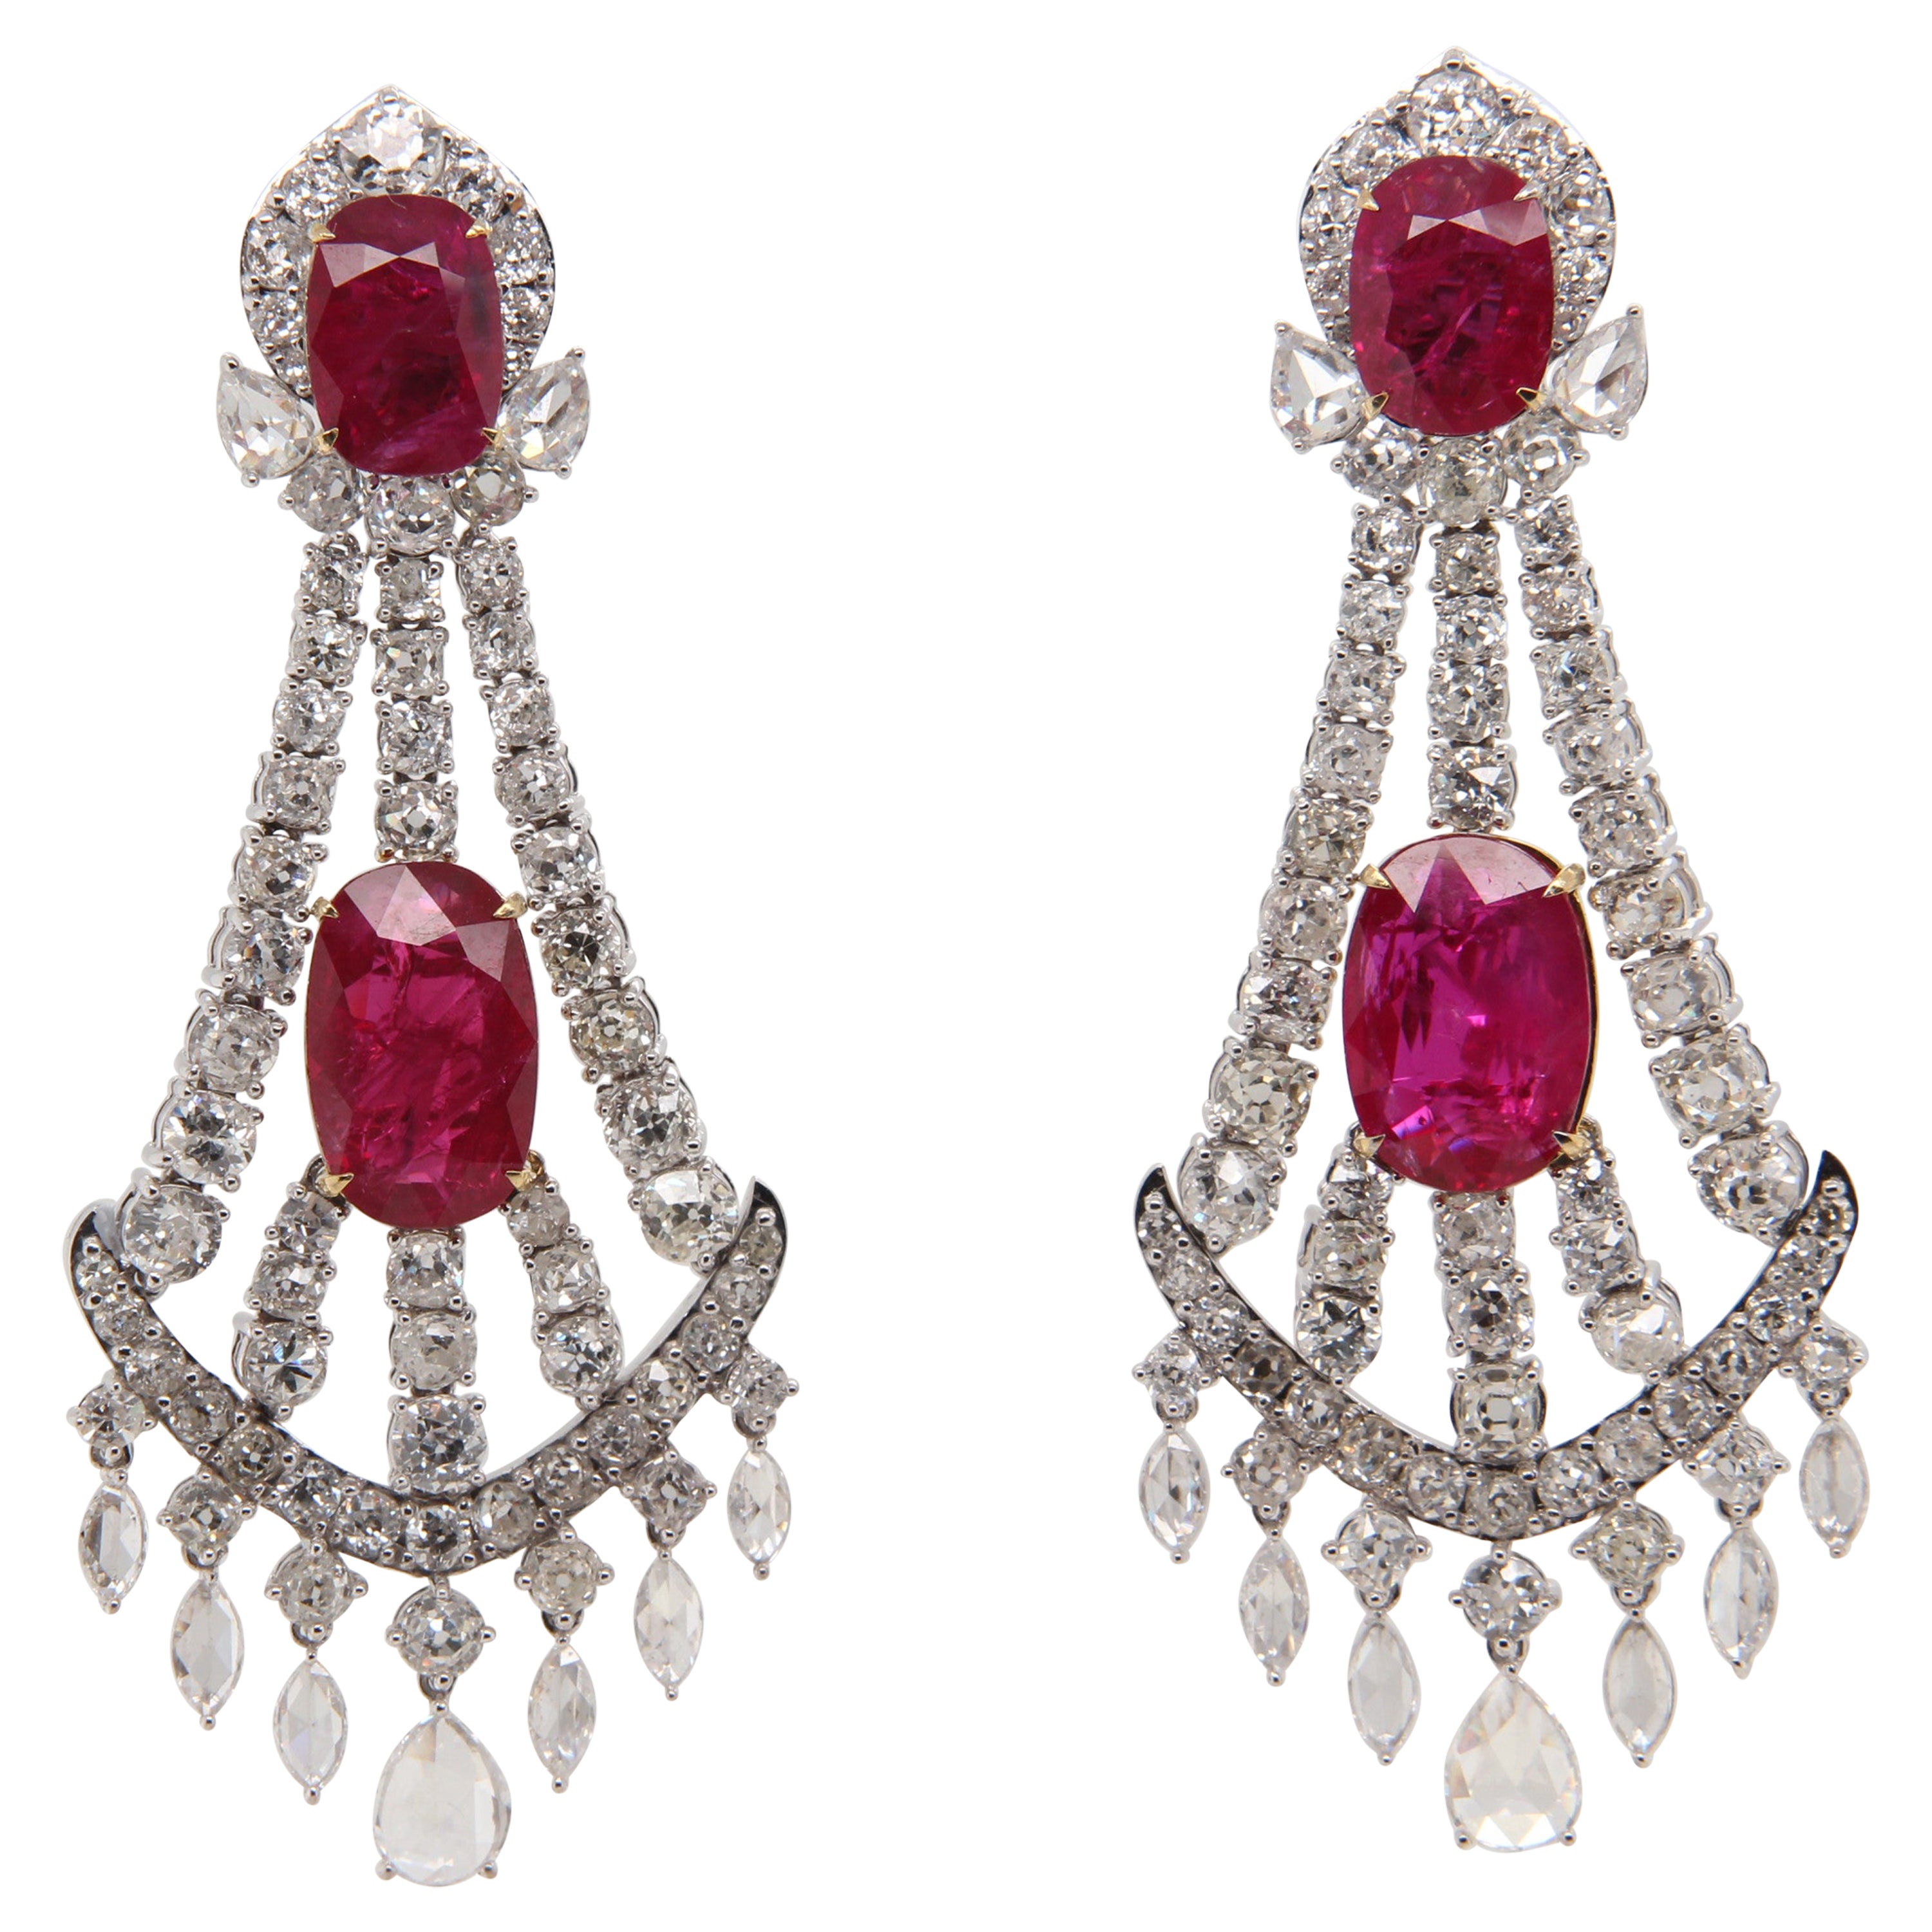 Gubelin Certified 10 Carat Unheated Burmese Ruby and Diamond Earring in 18K Gold